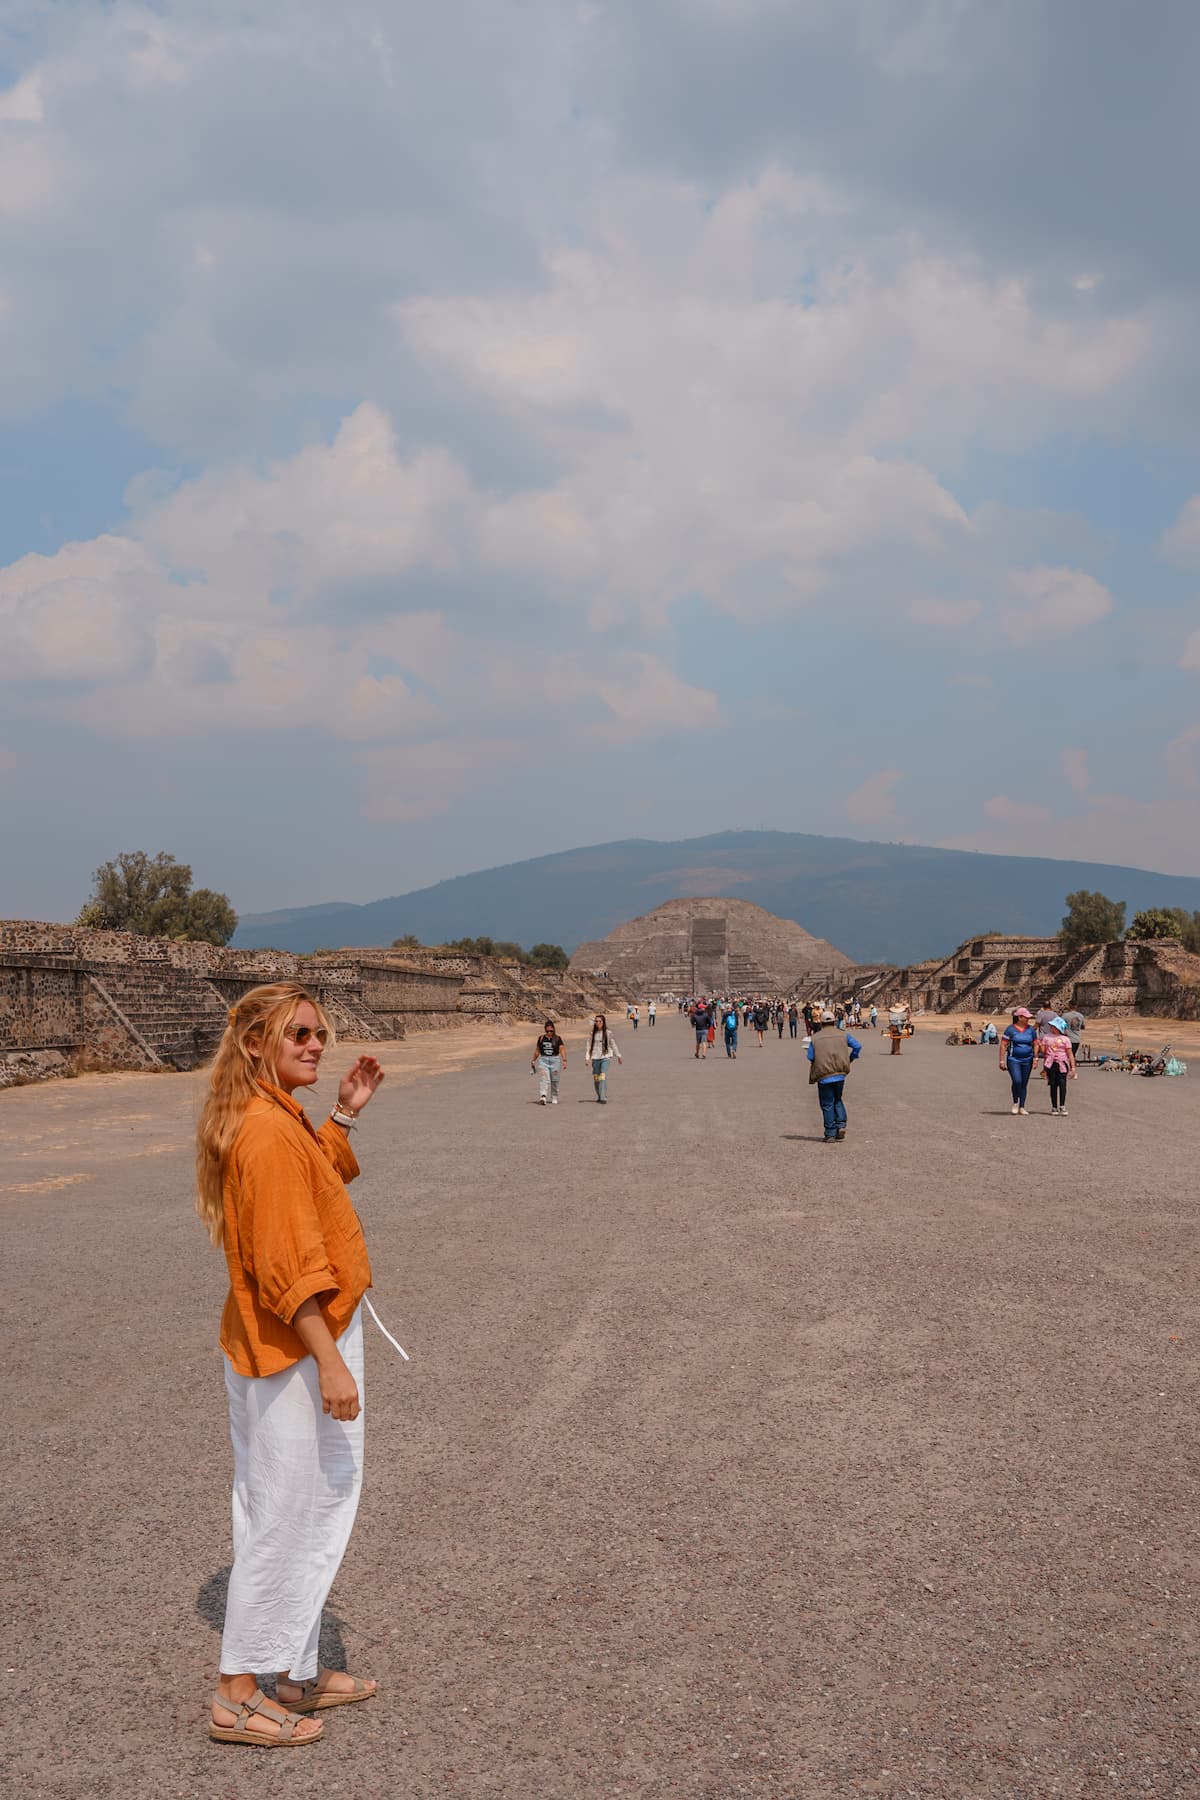 Teotihuacan Pyramids 